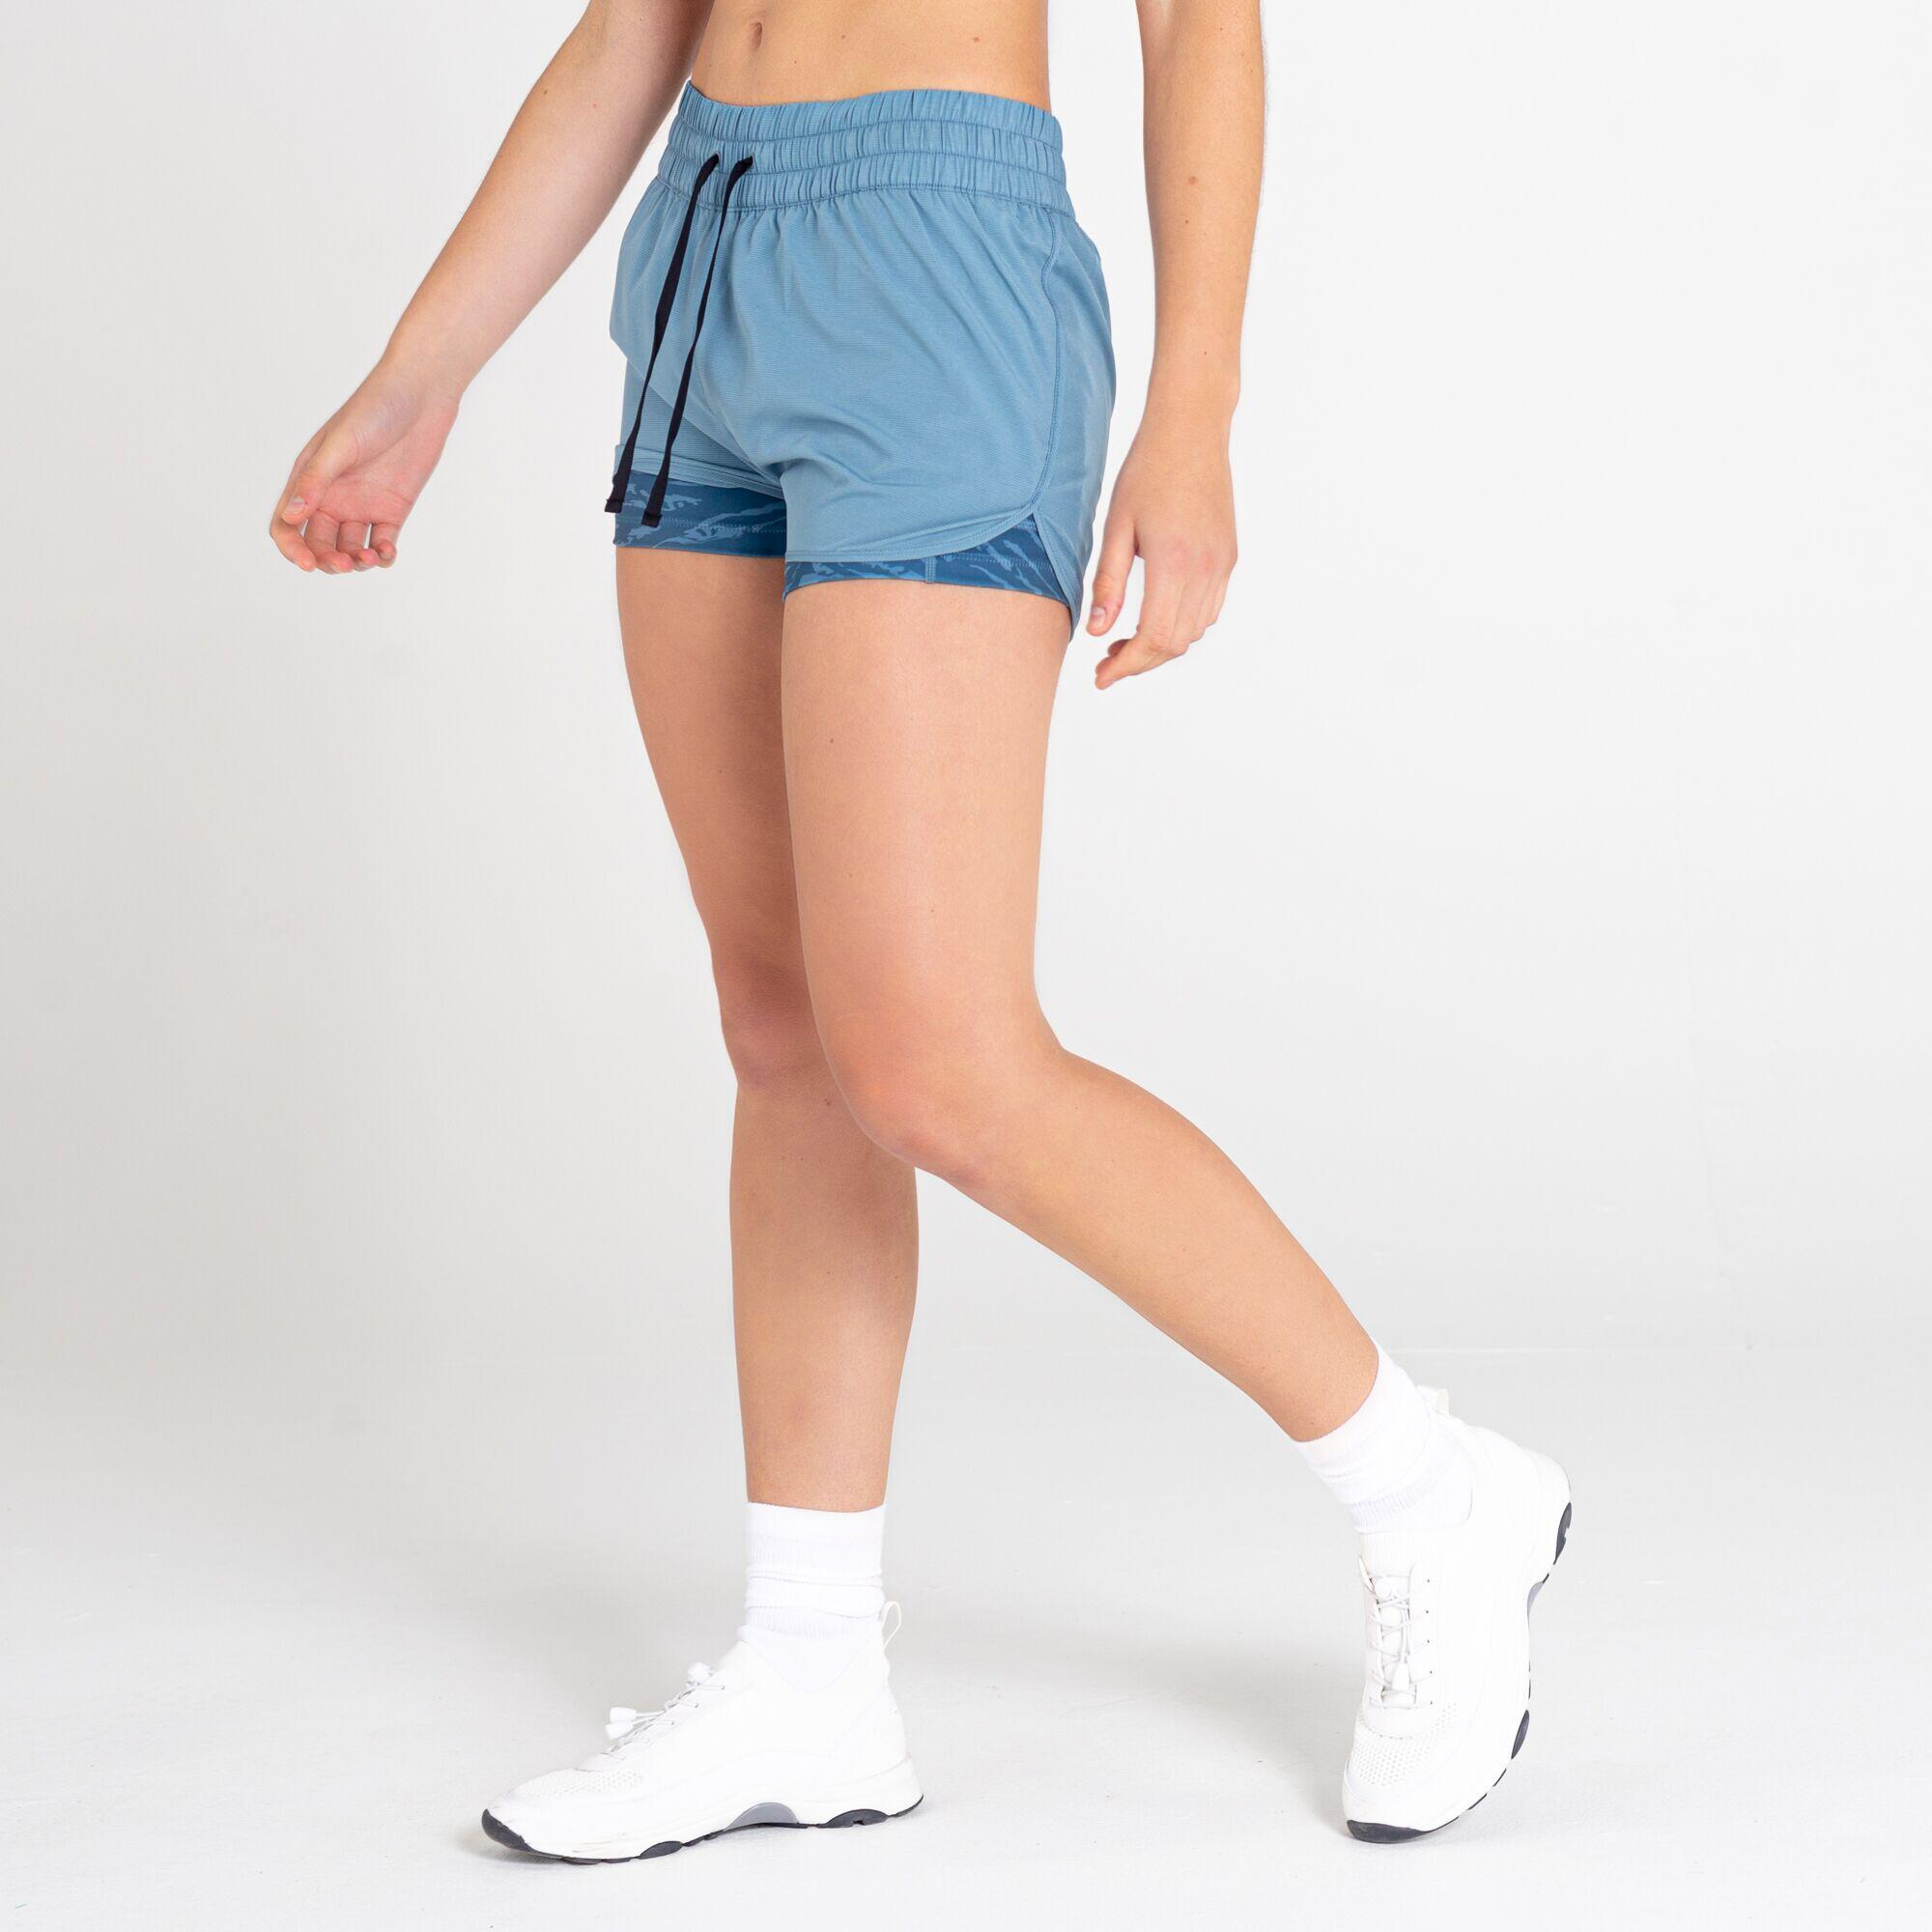 Sprint Up Women's Fitness Shorts - Bluestone / Grey 2/5